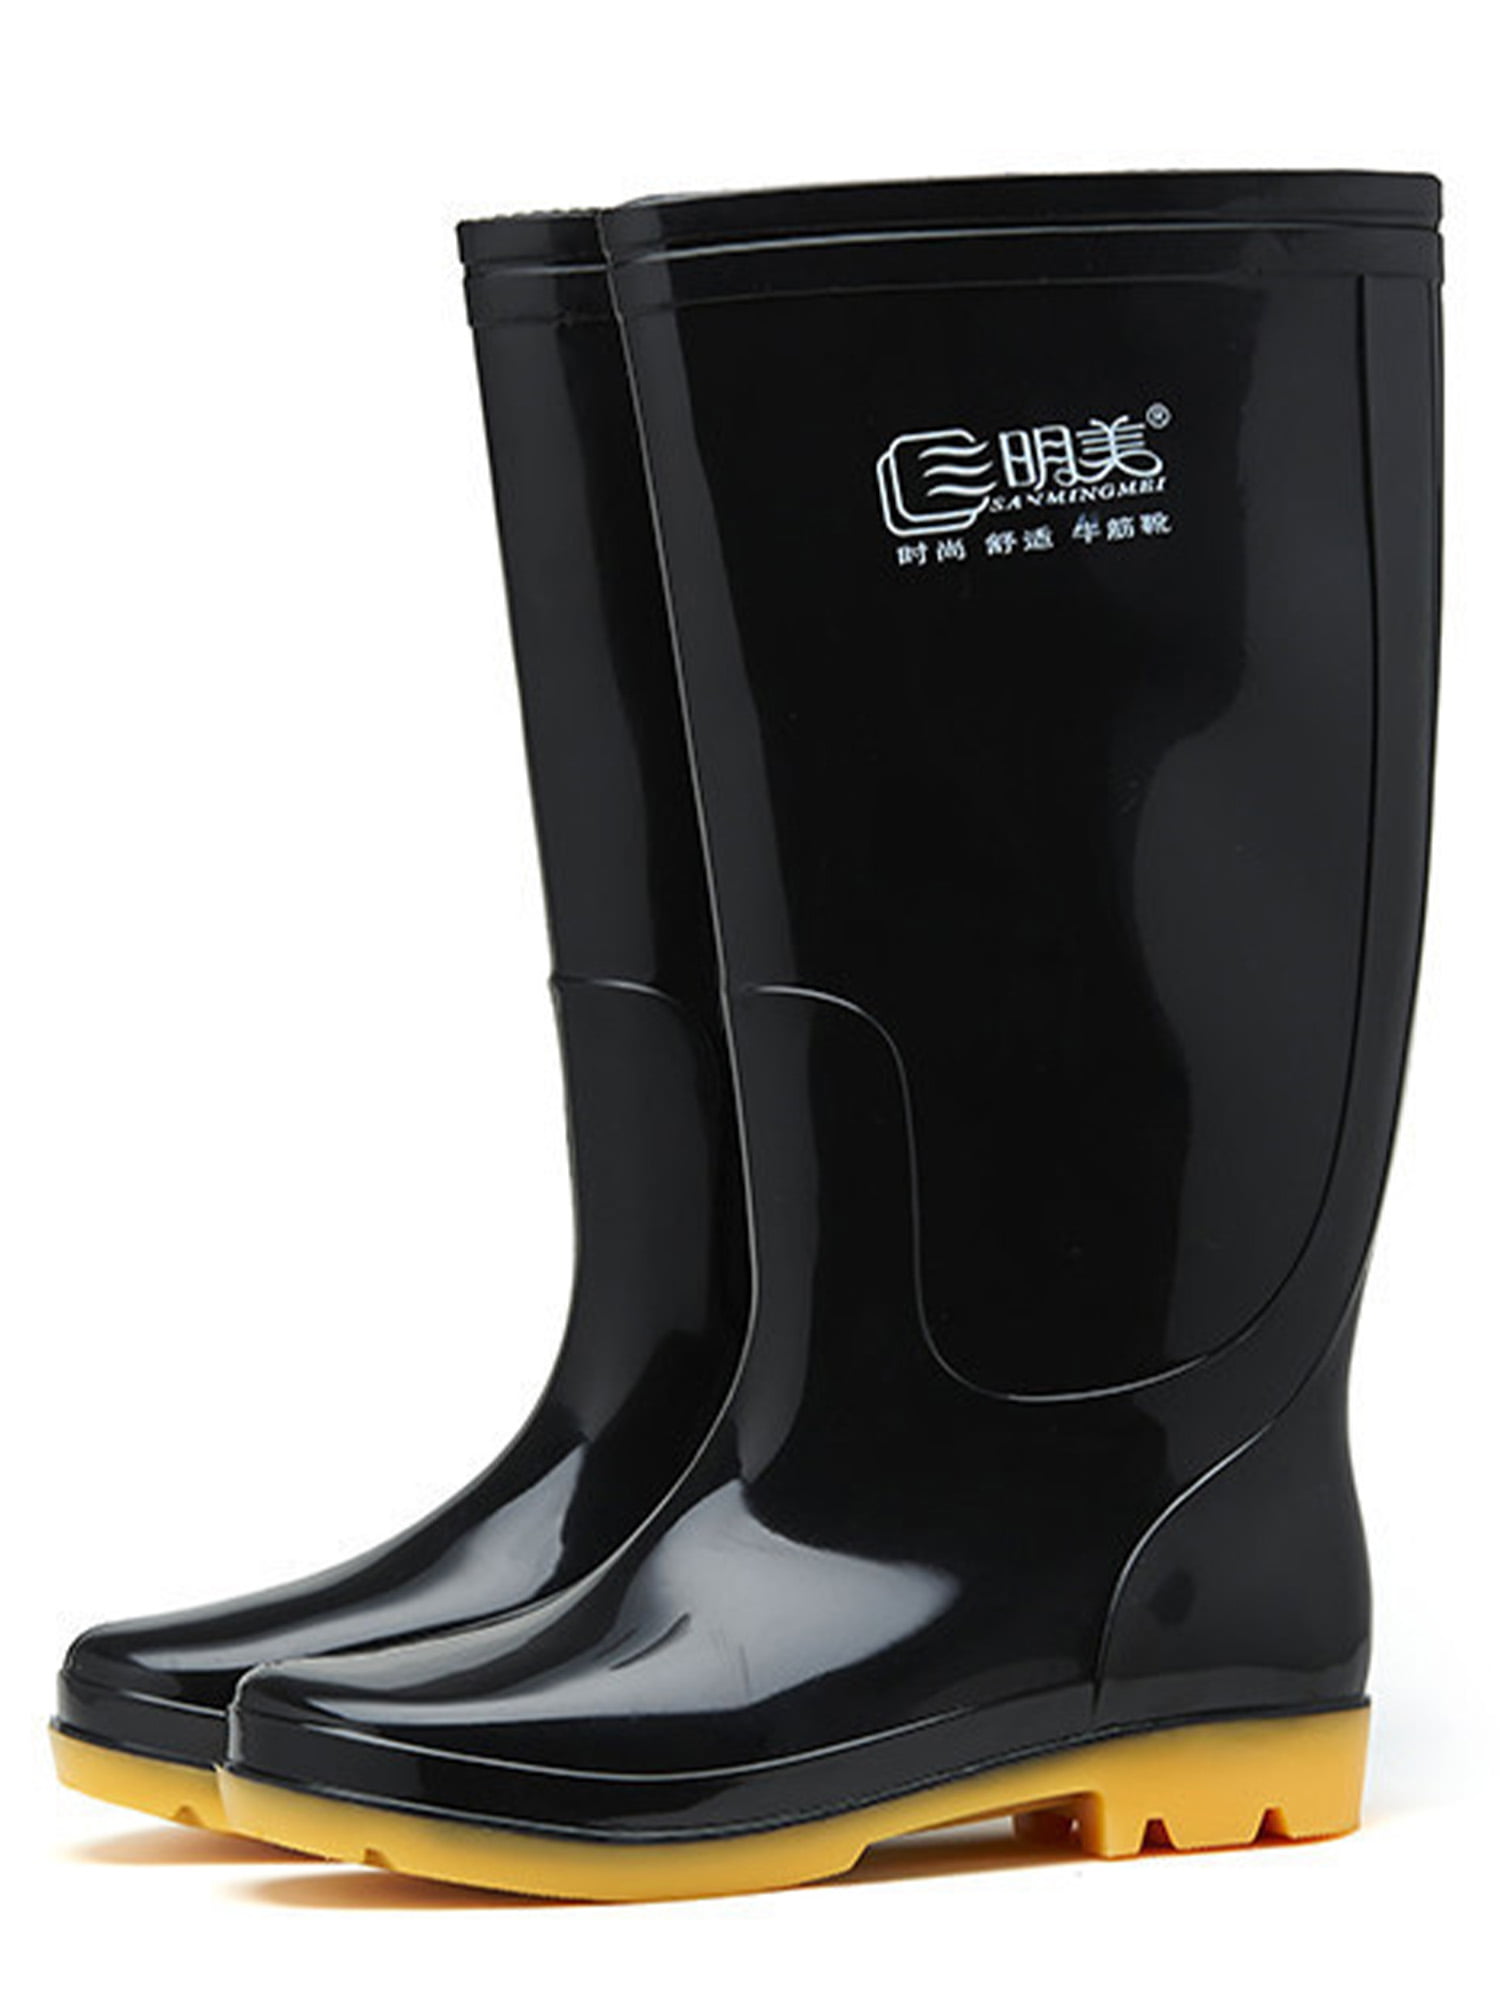 LUXUR Men's Rain Boots Waterproof Rubber PVC Anti-Slip Outdoor Muck Mud Hunting Boots